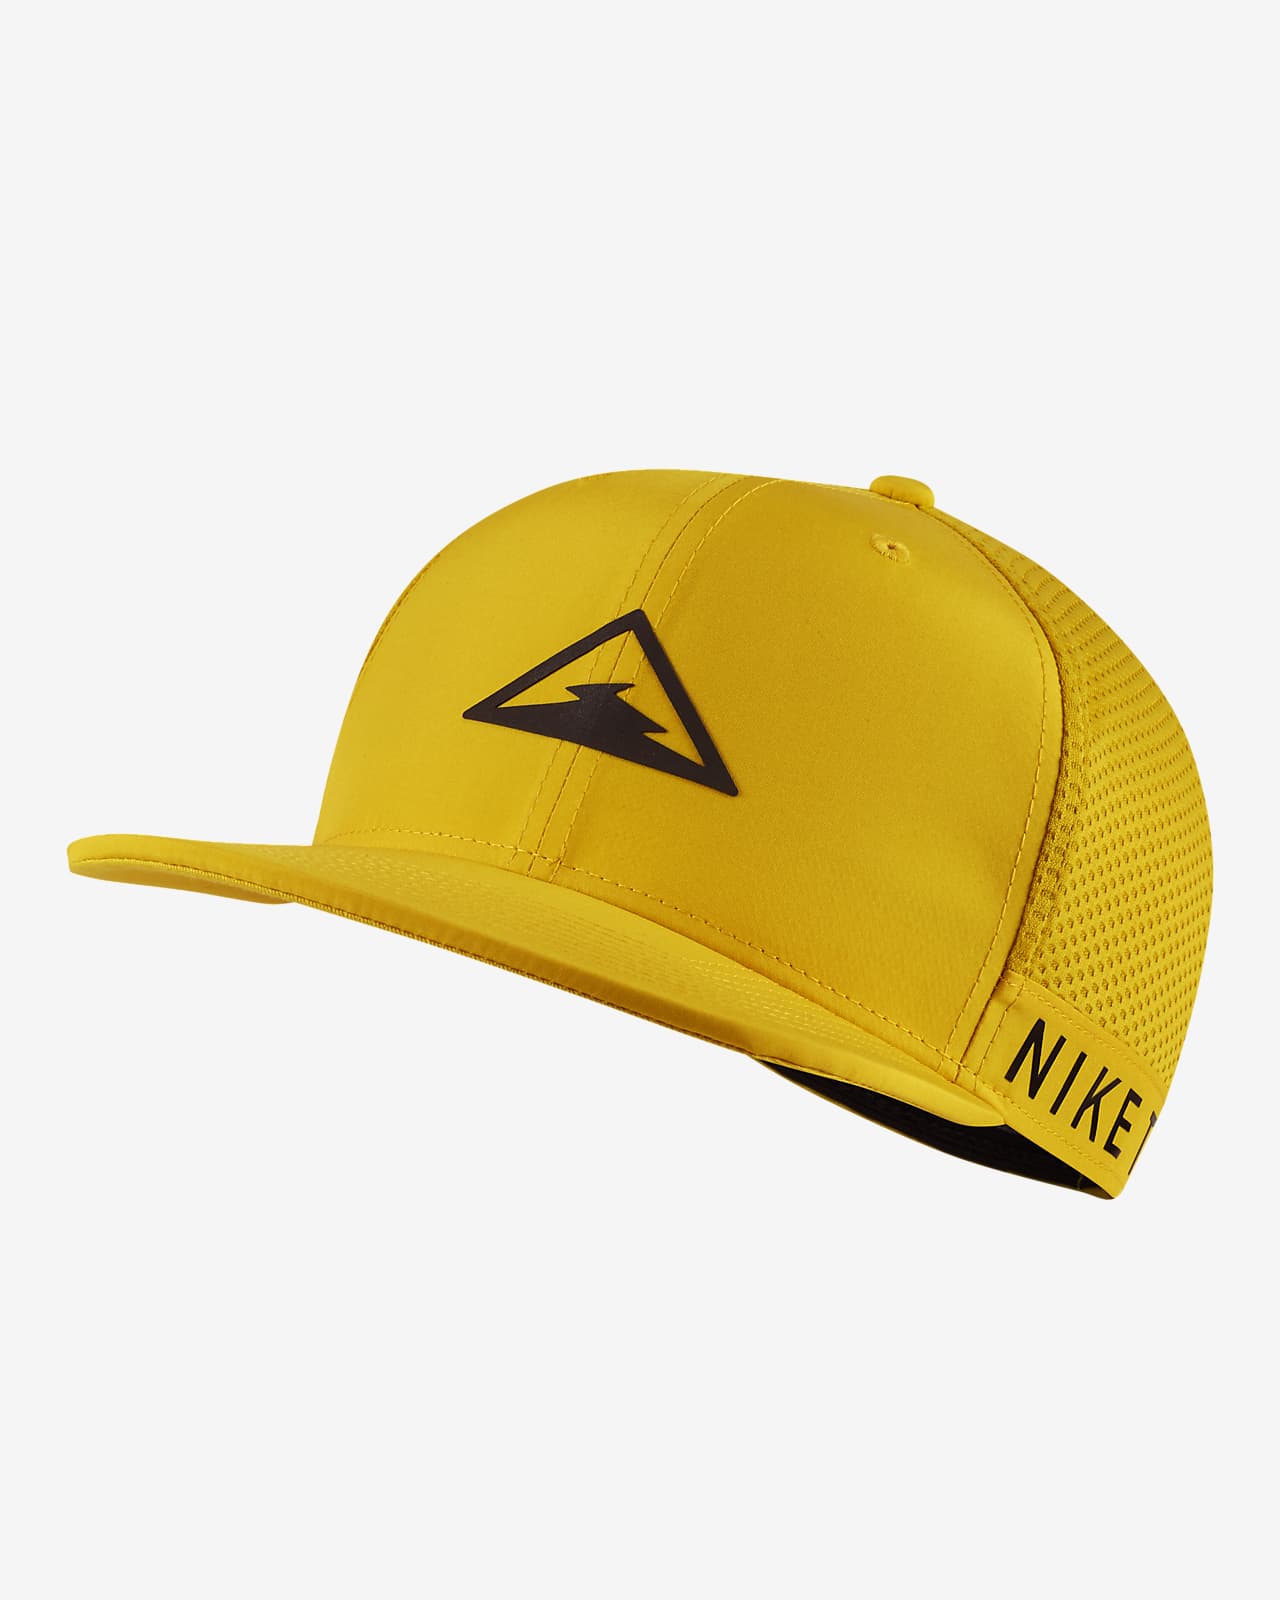 nike trail hats